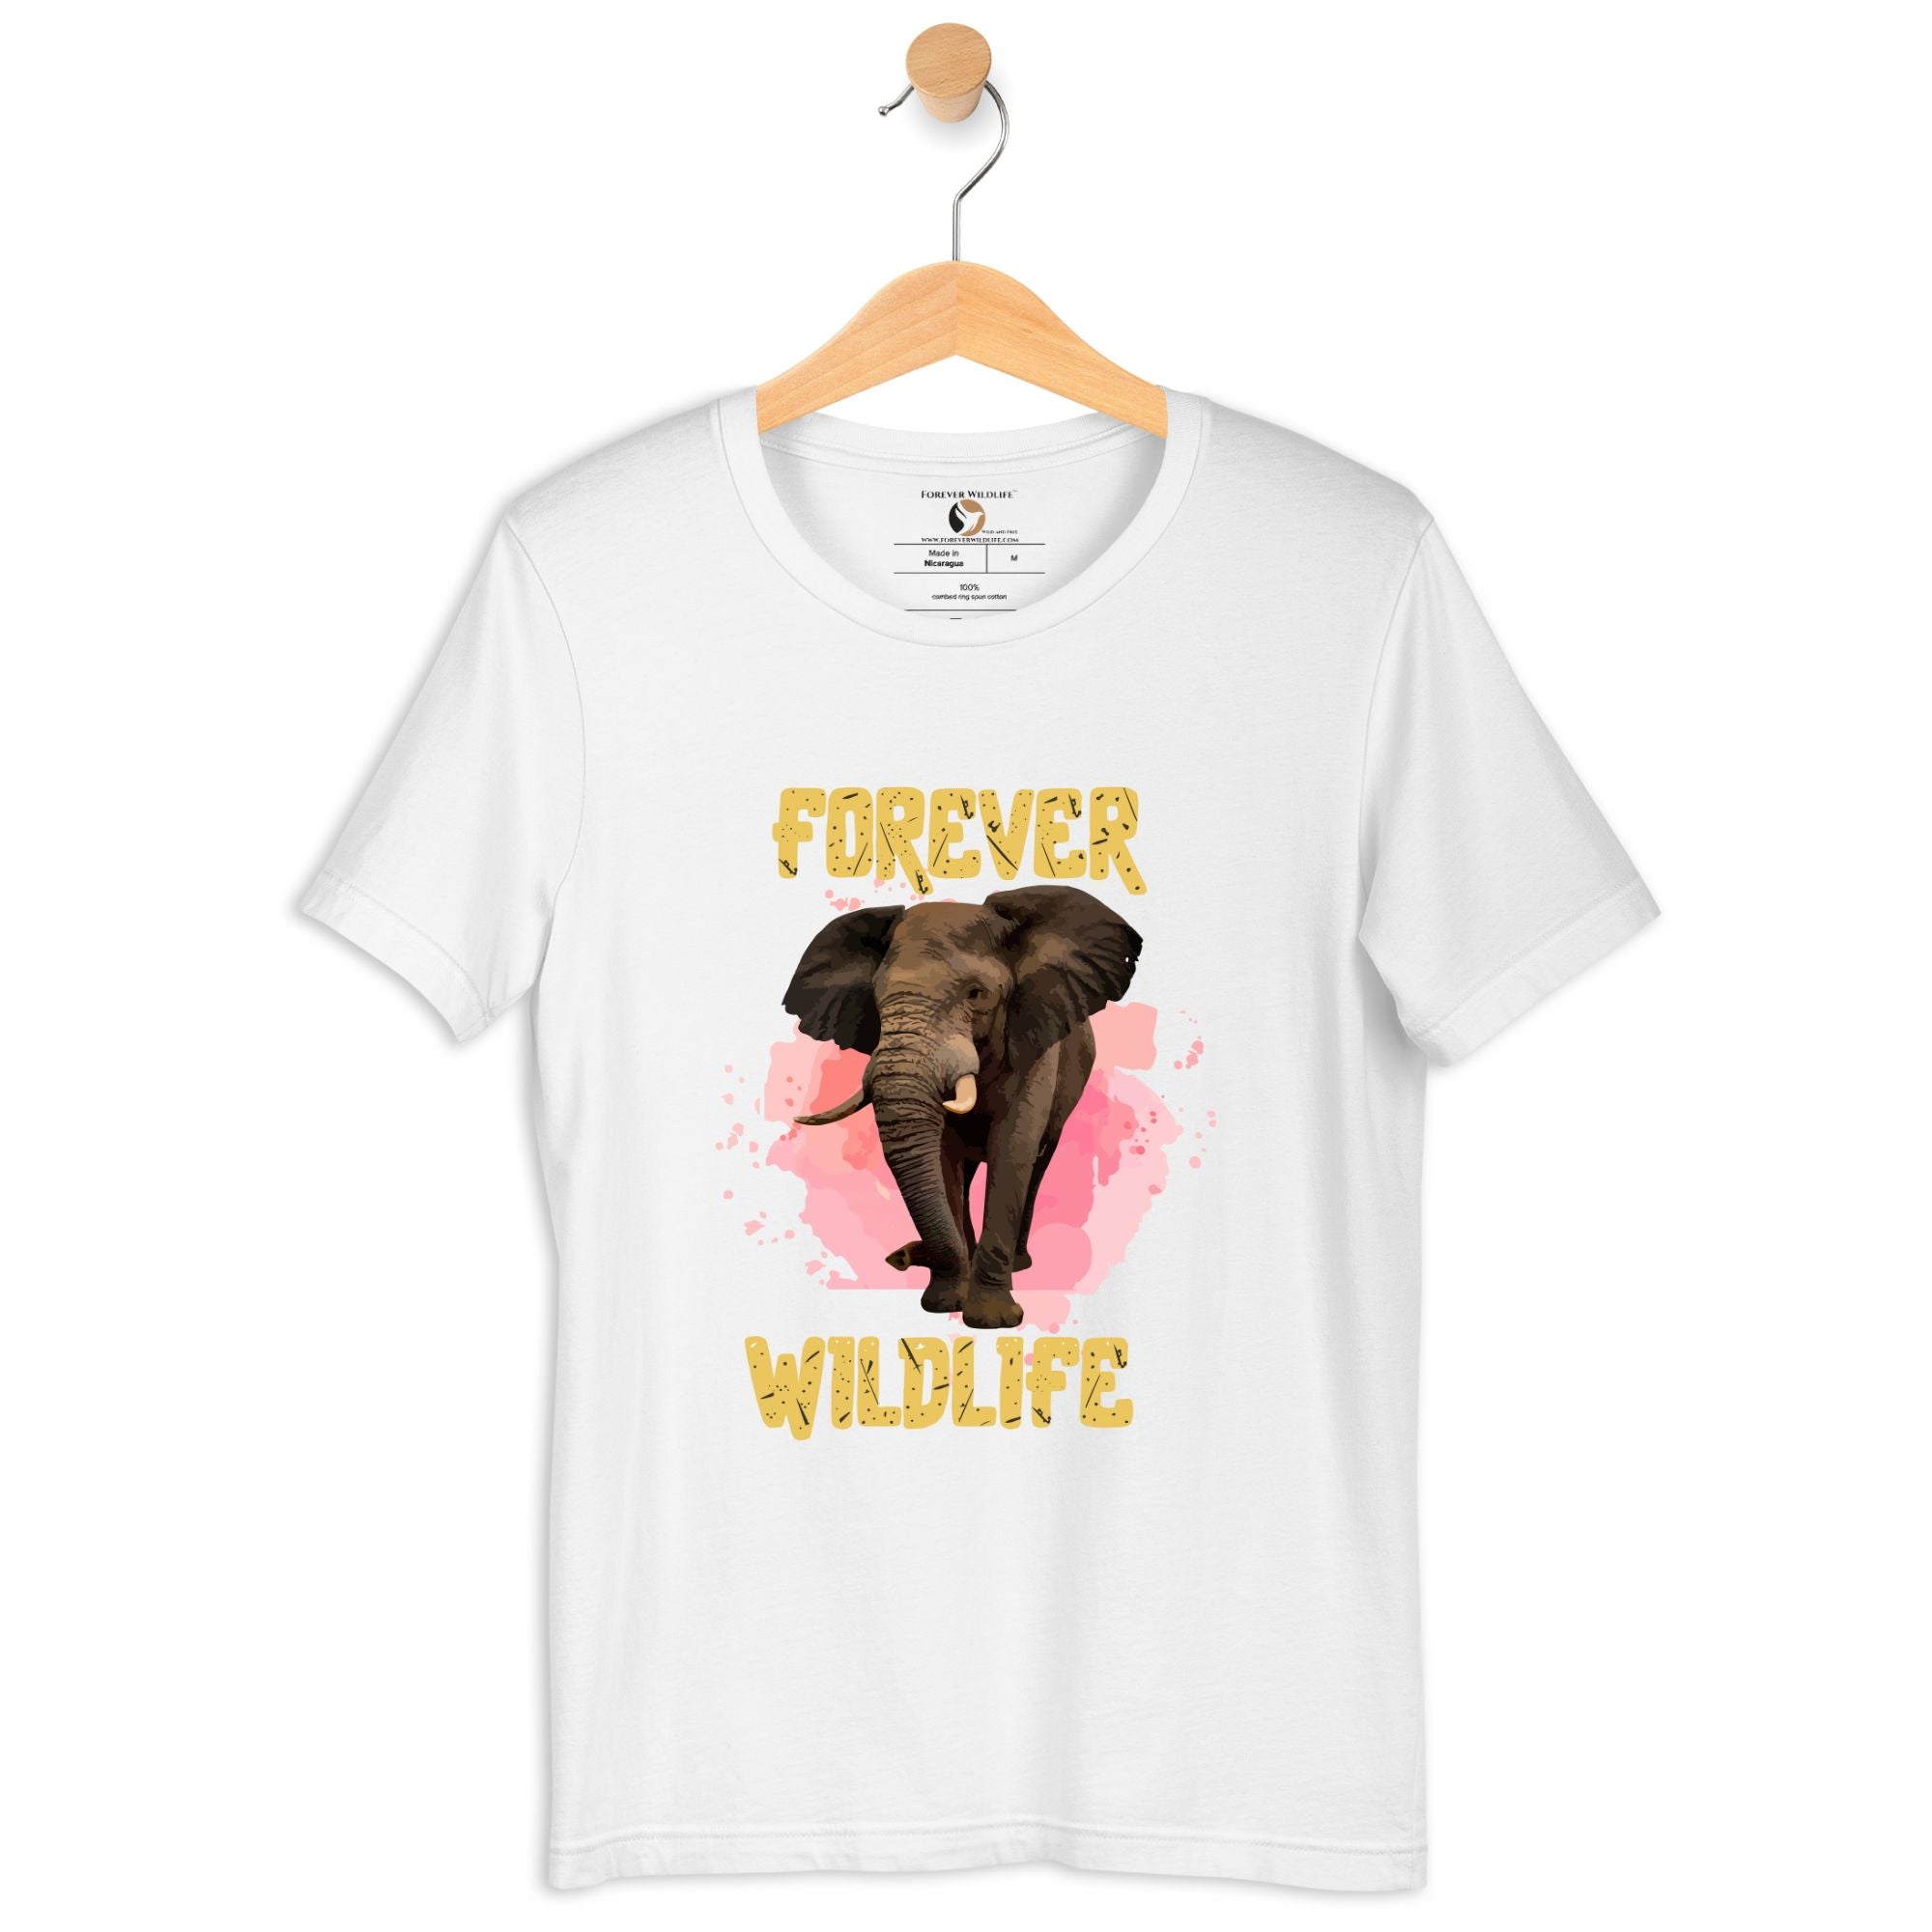 Elephant T-Shirt in White – Premium Wildlife T-Shirt Design, Wildlife Clothing & Apparel from Forever Wildlife